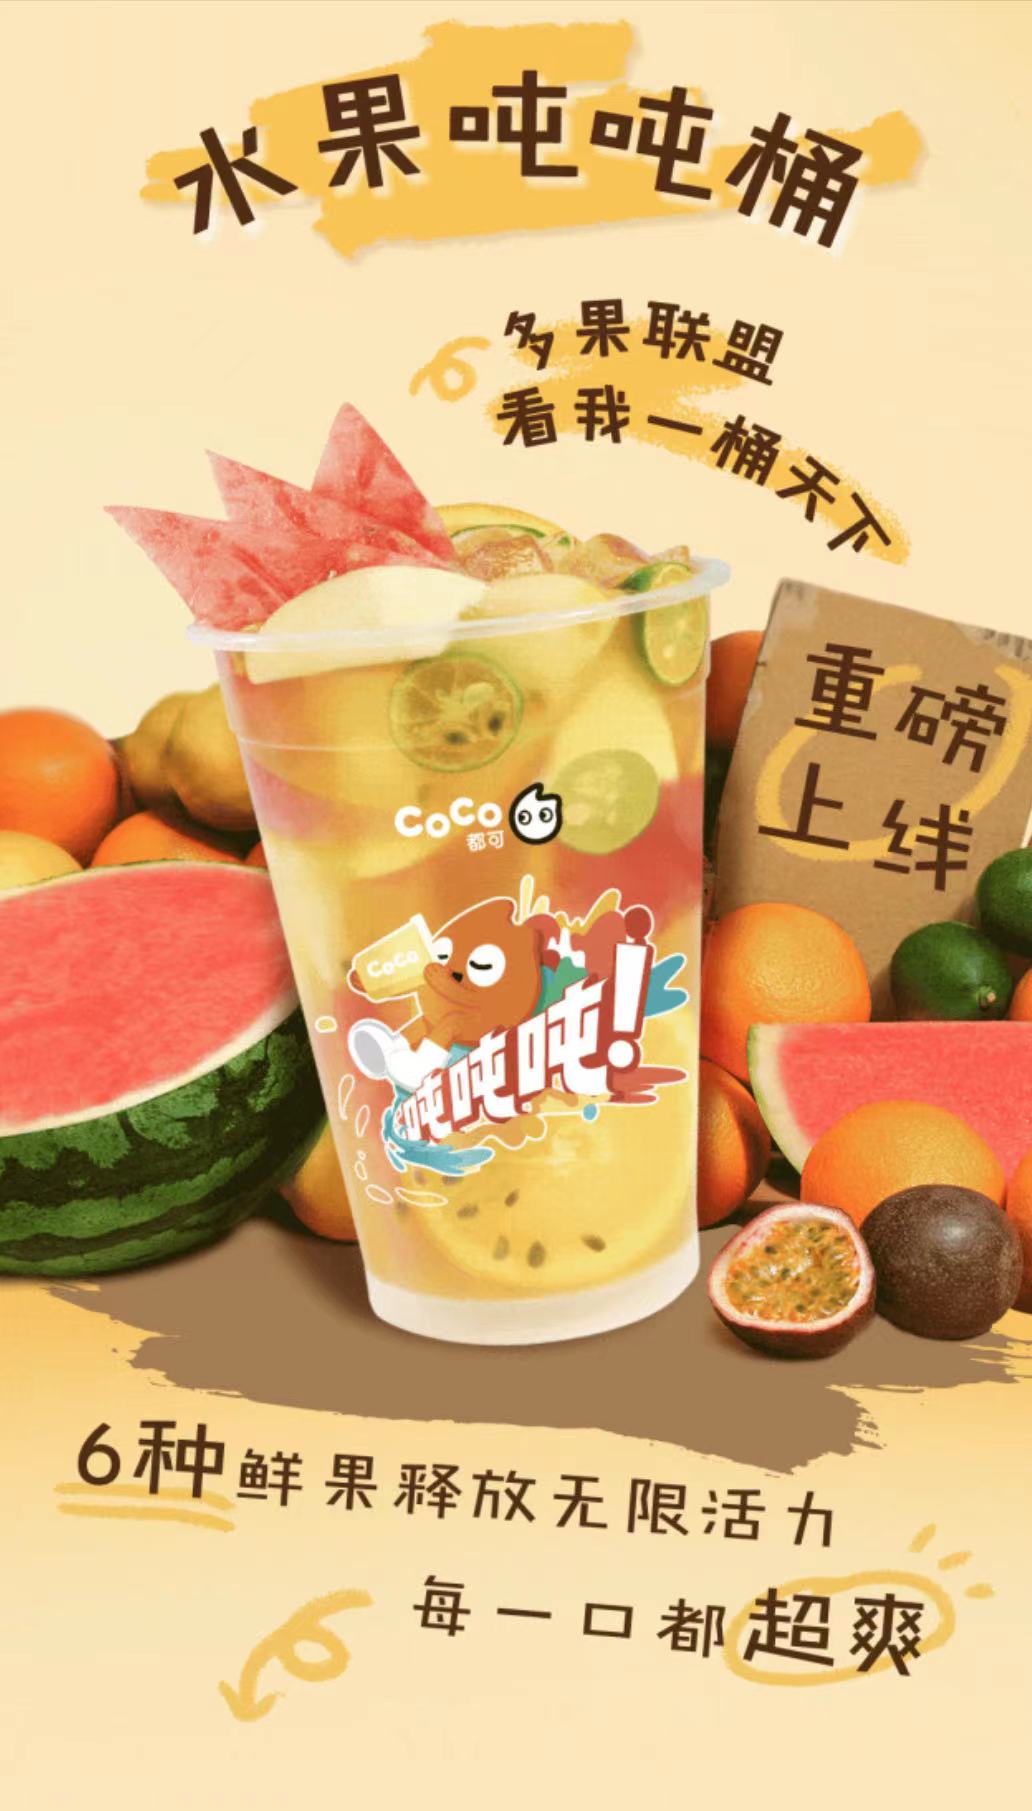 coco奶茶广告语图片